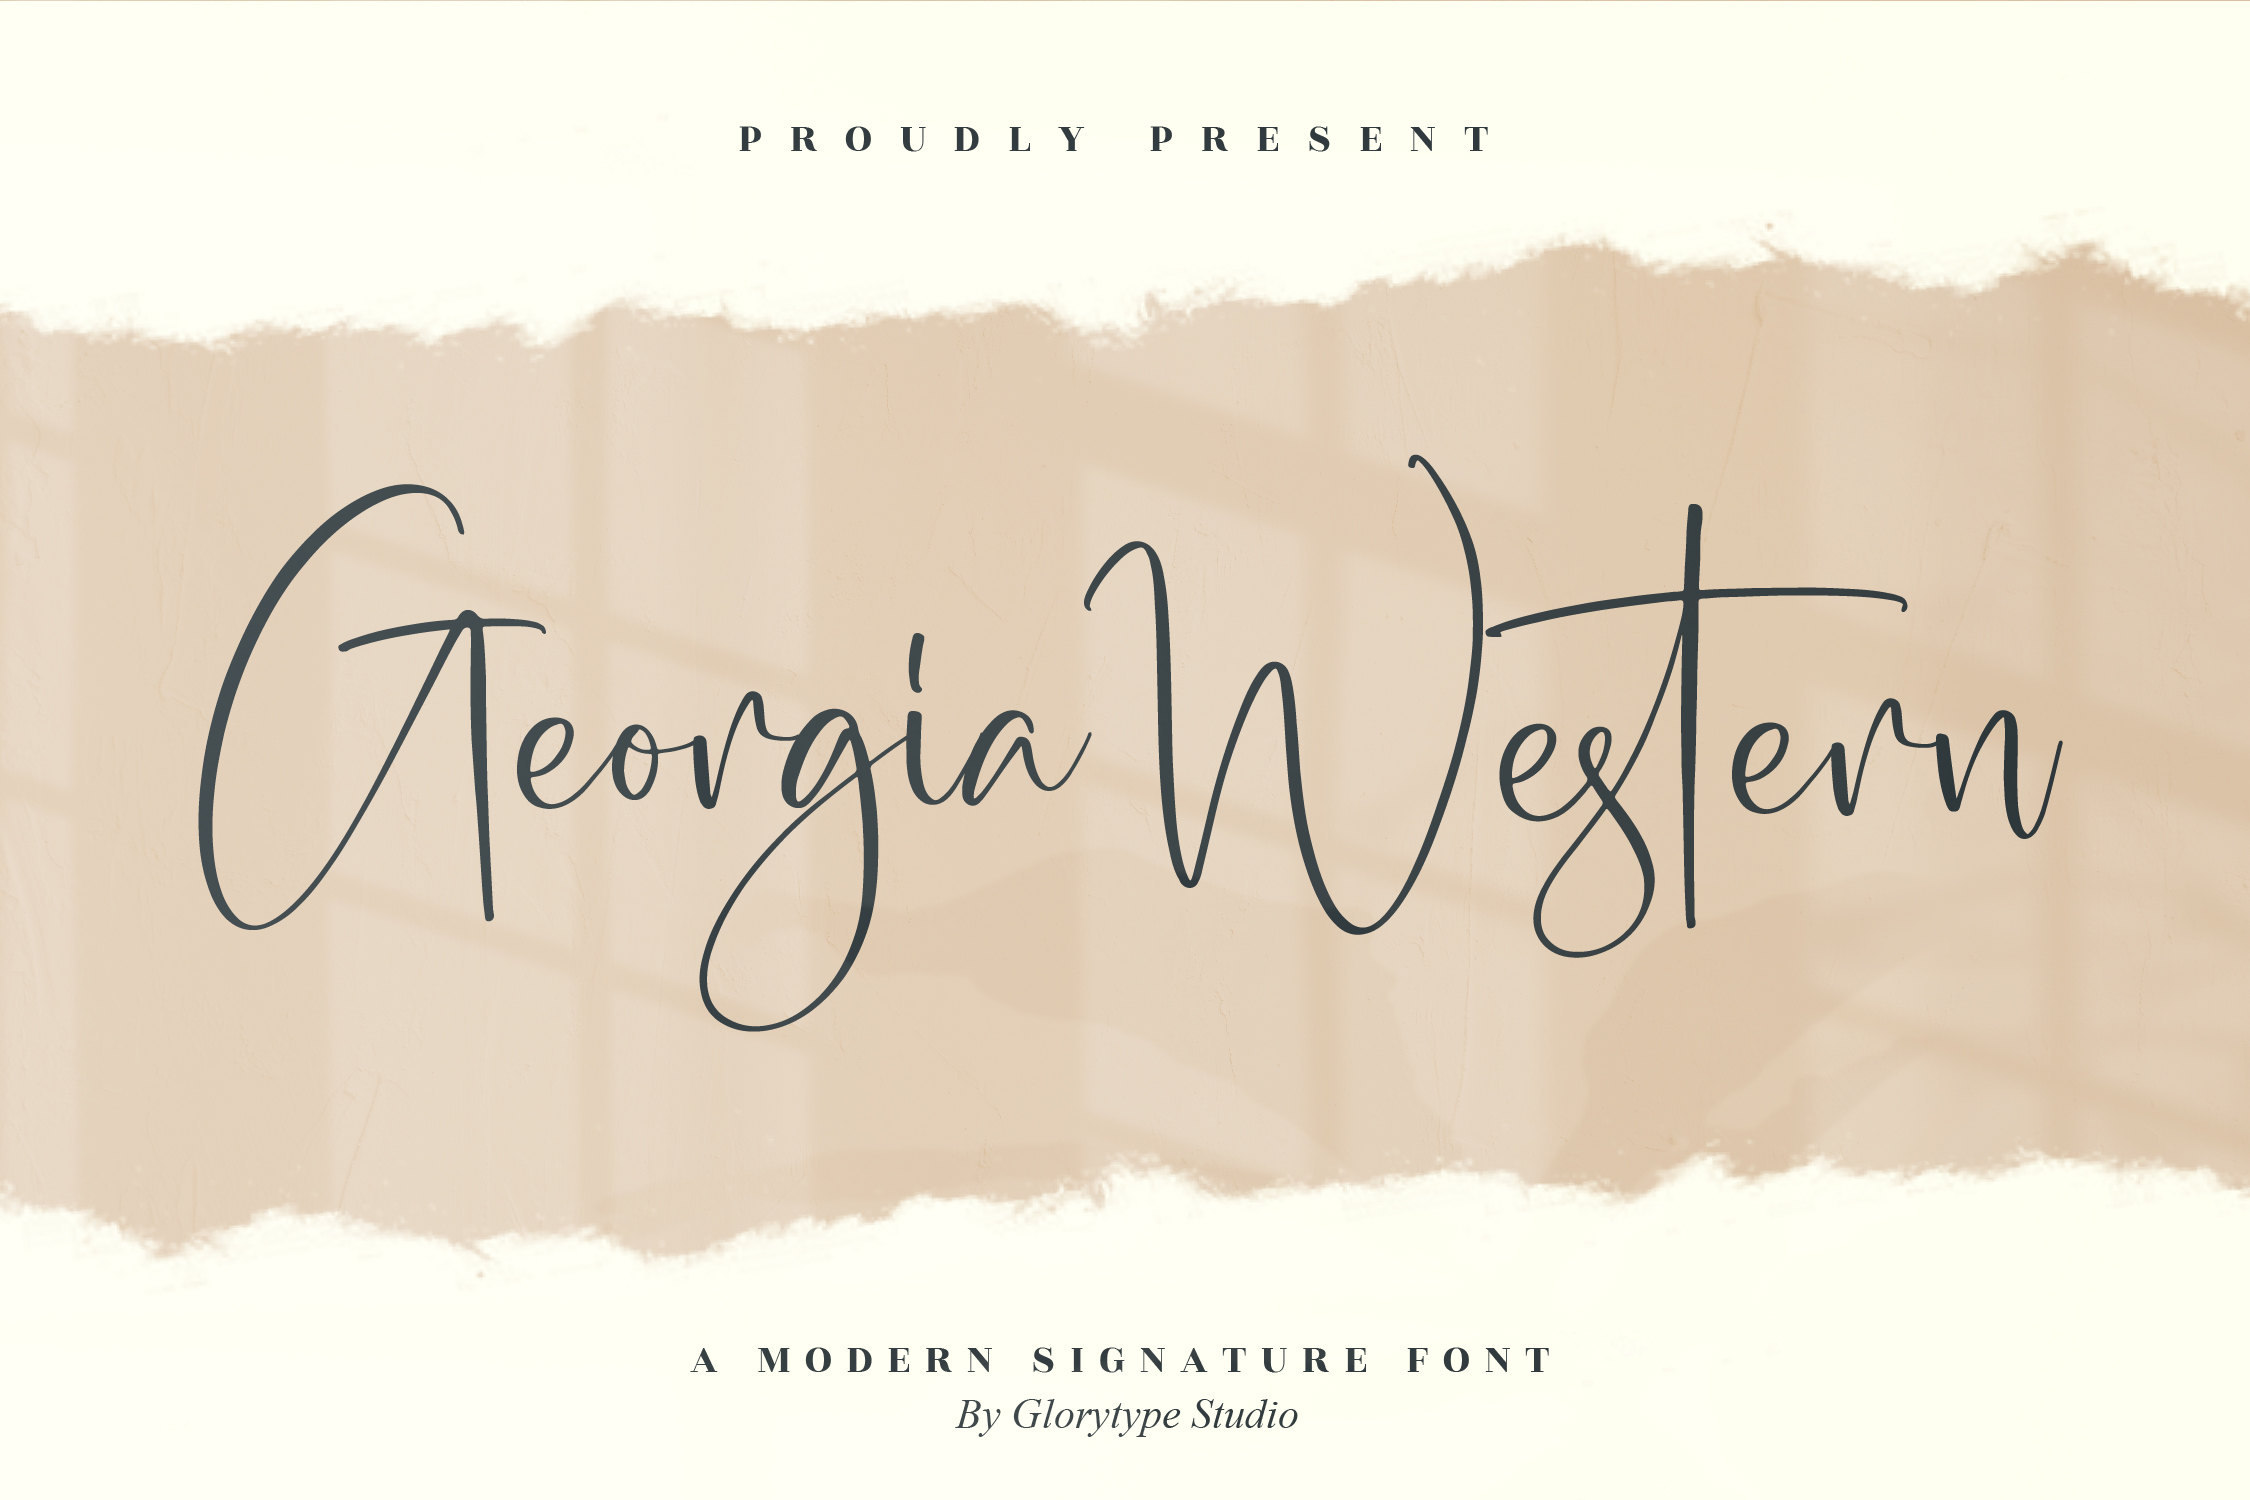 Georgia Western